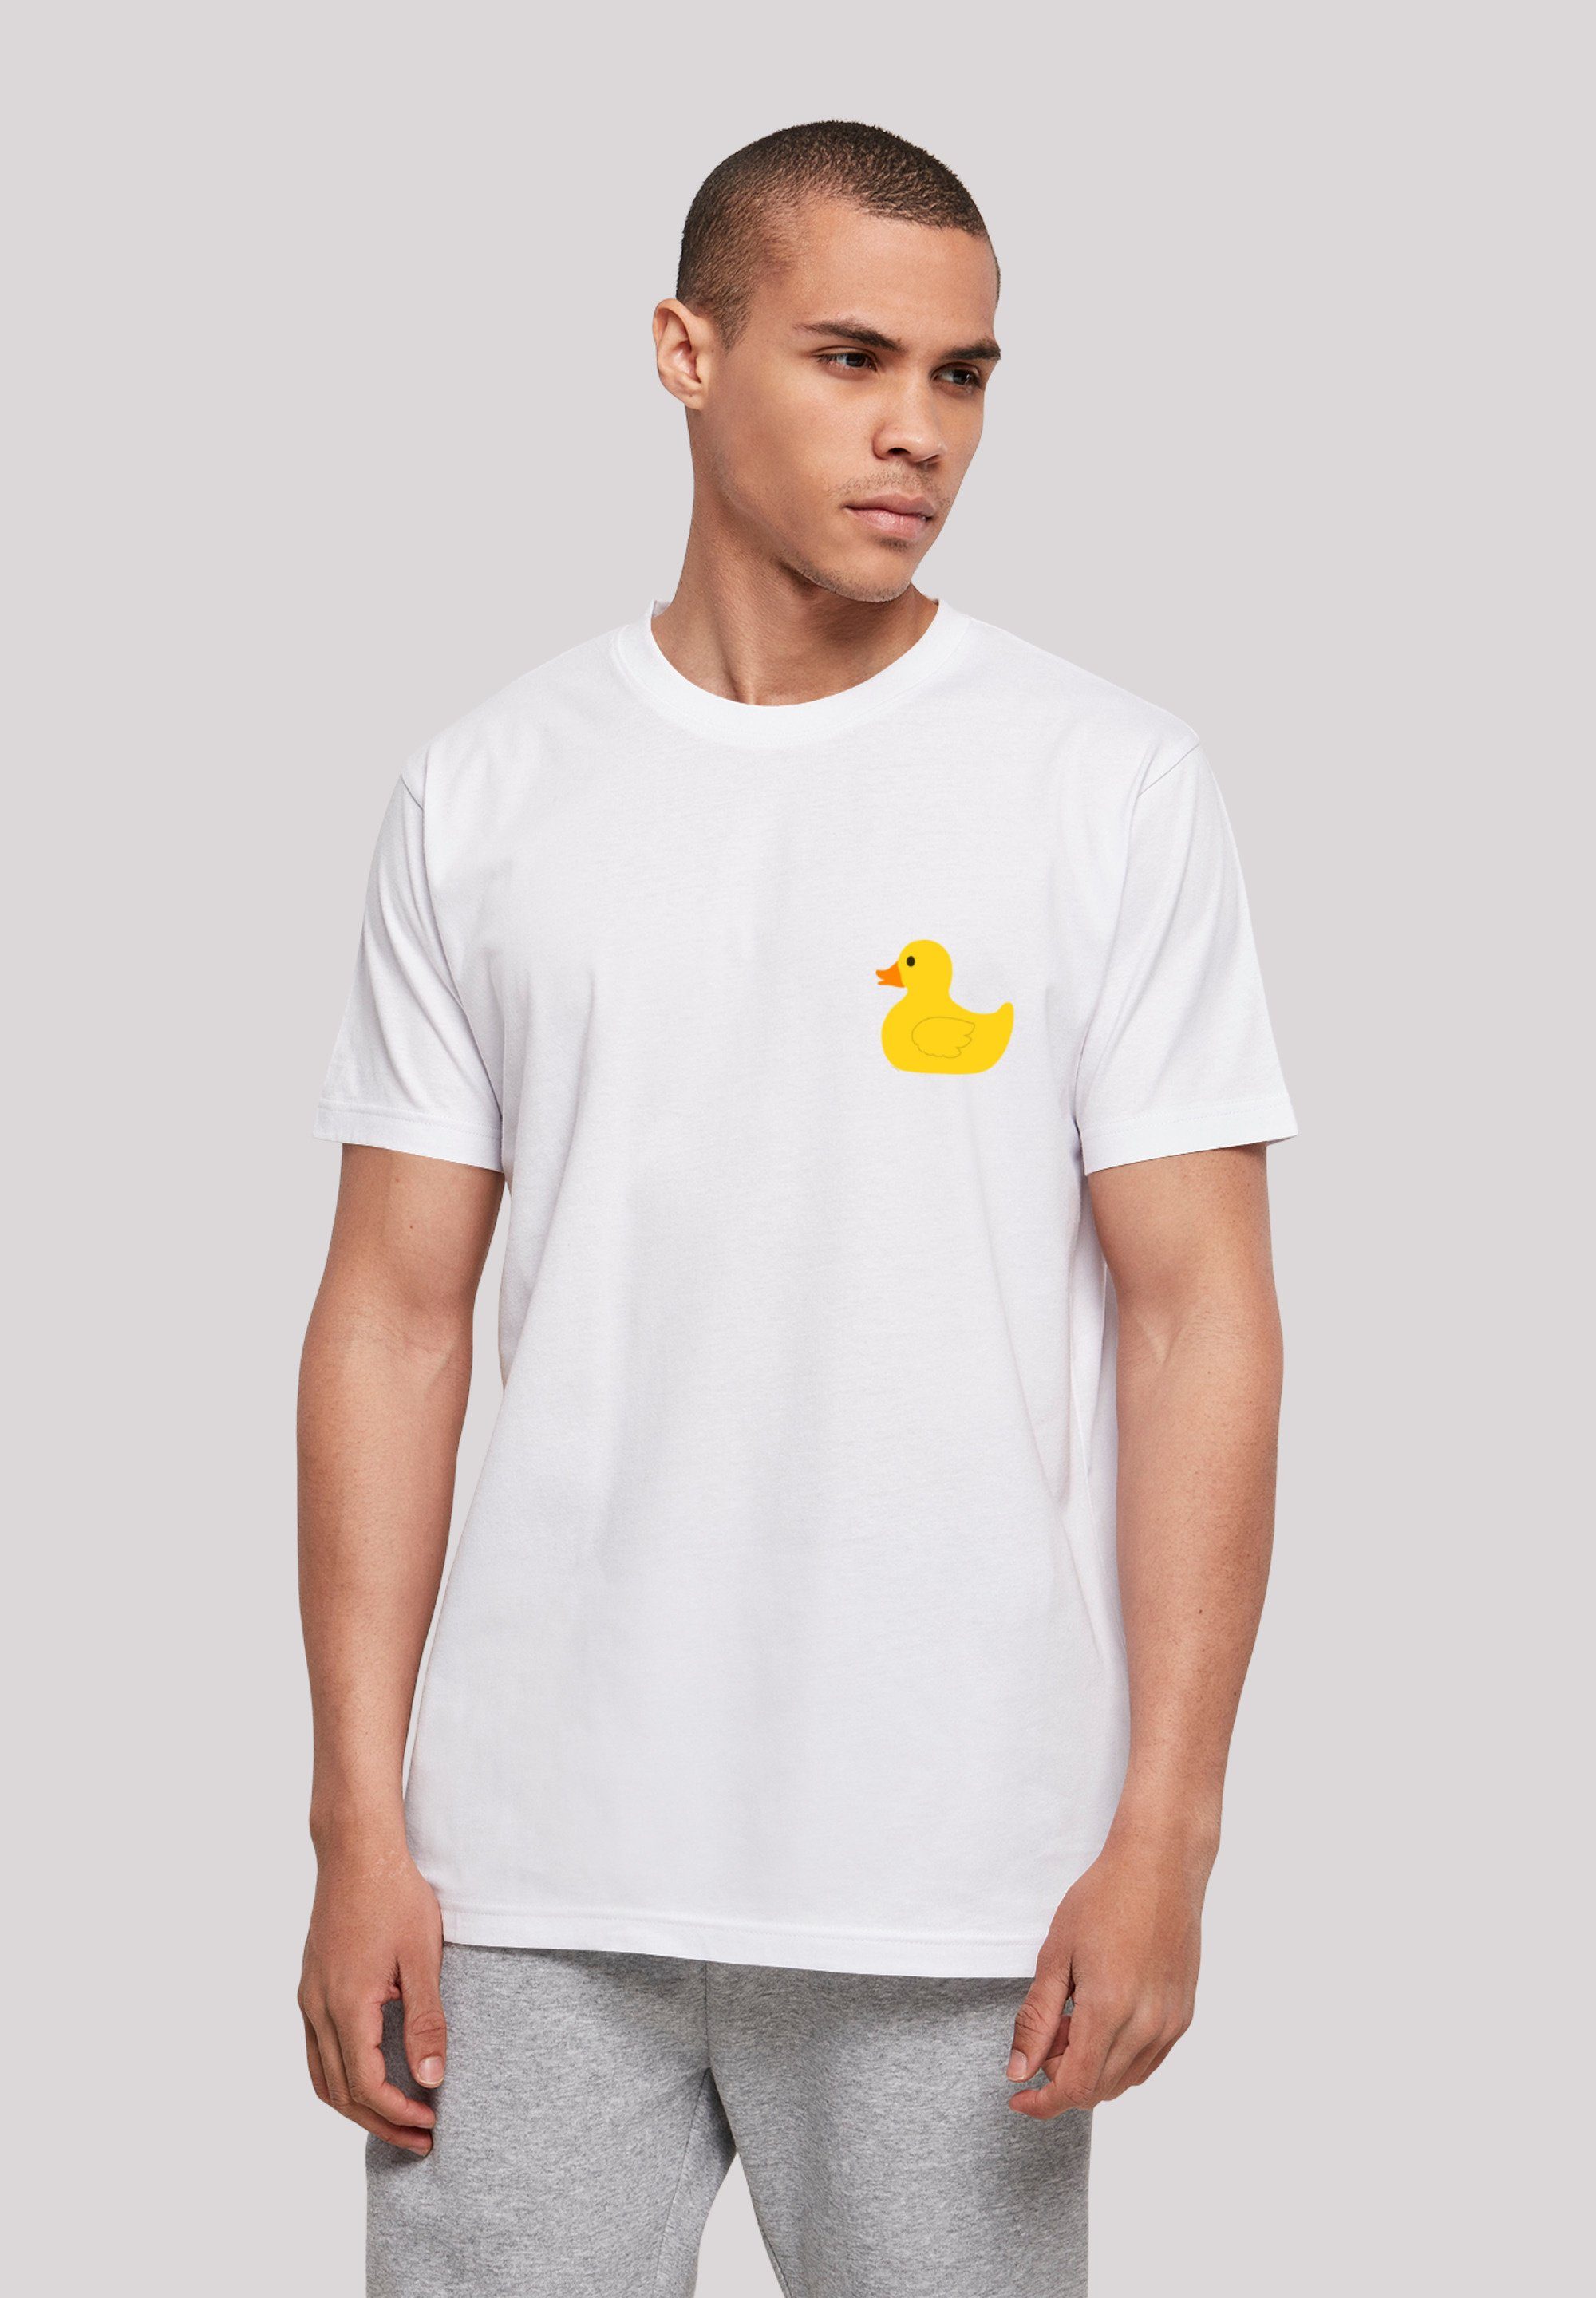 F4NT4STIC T-Shirt Yellow Rubber Duck UNISEX Doppelnähte Rippbündchen Print, am am Hals TEE und Saum